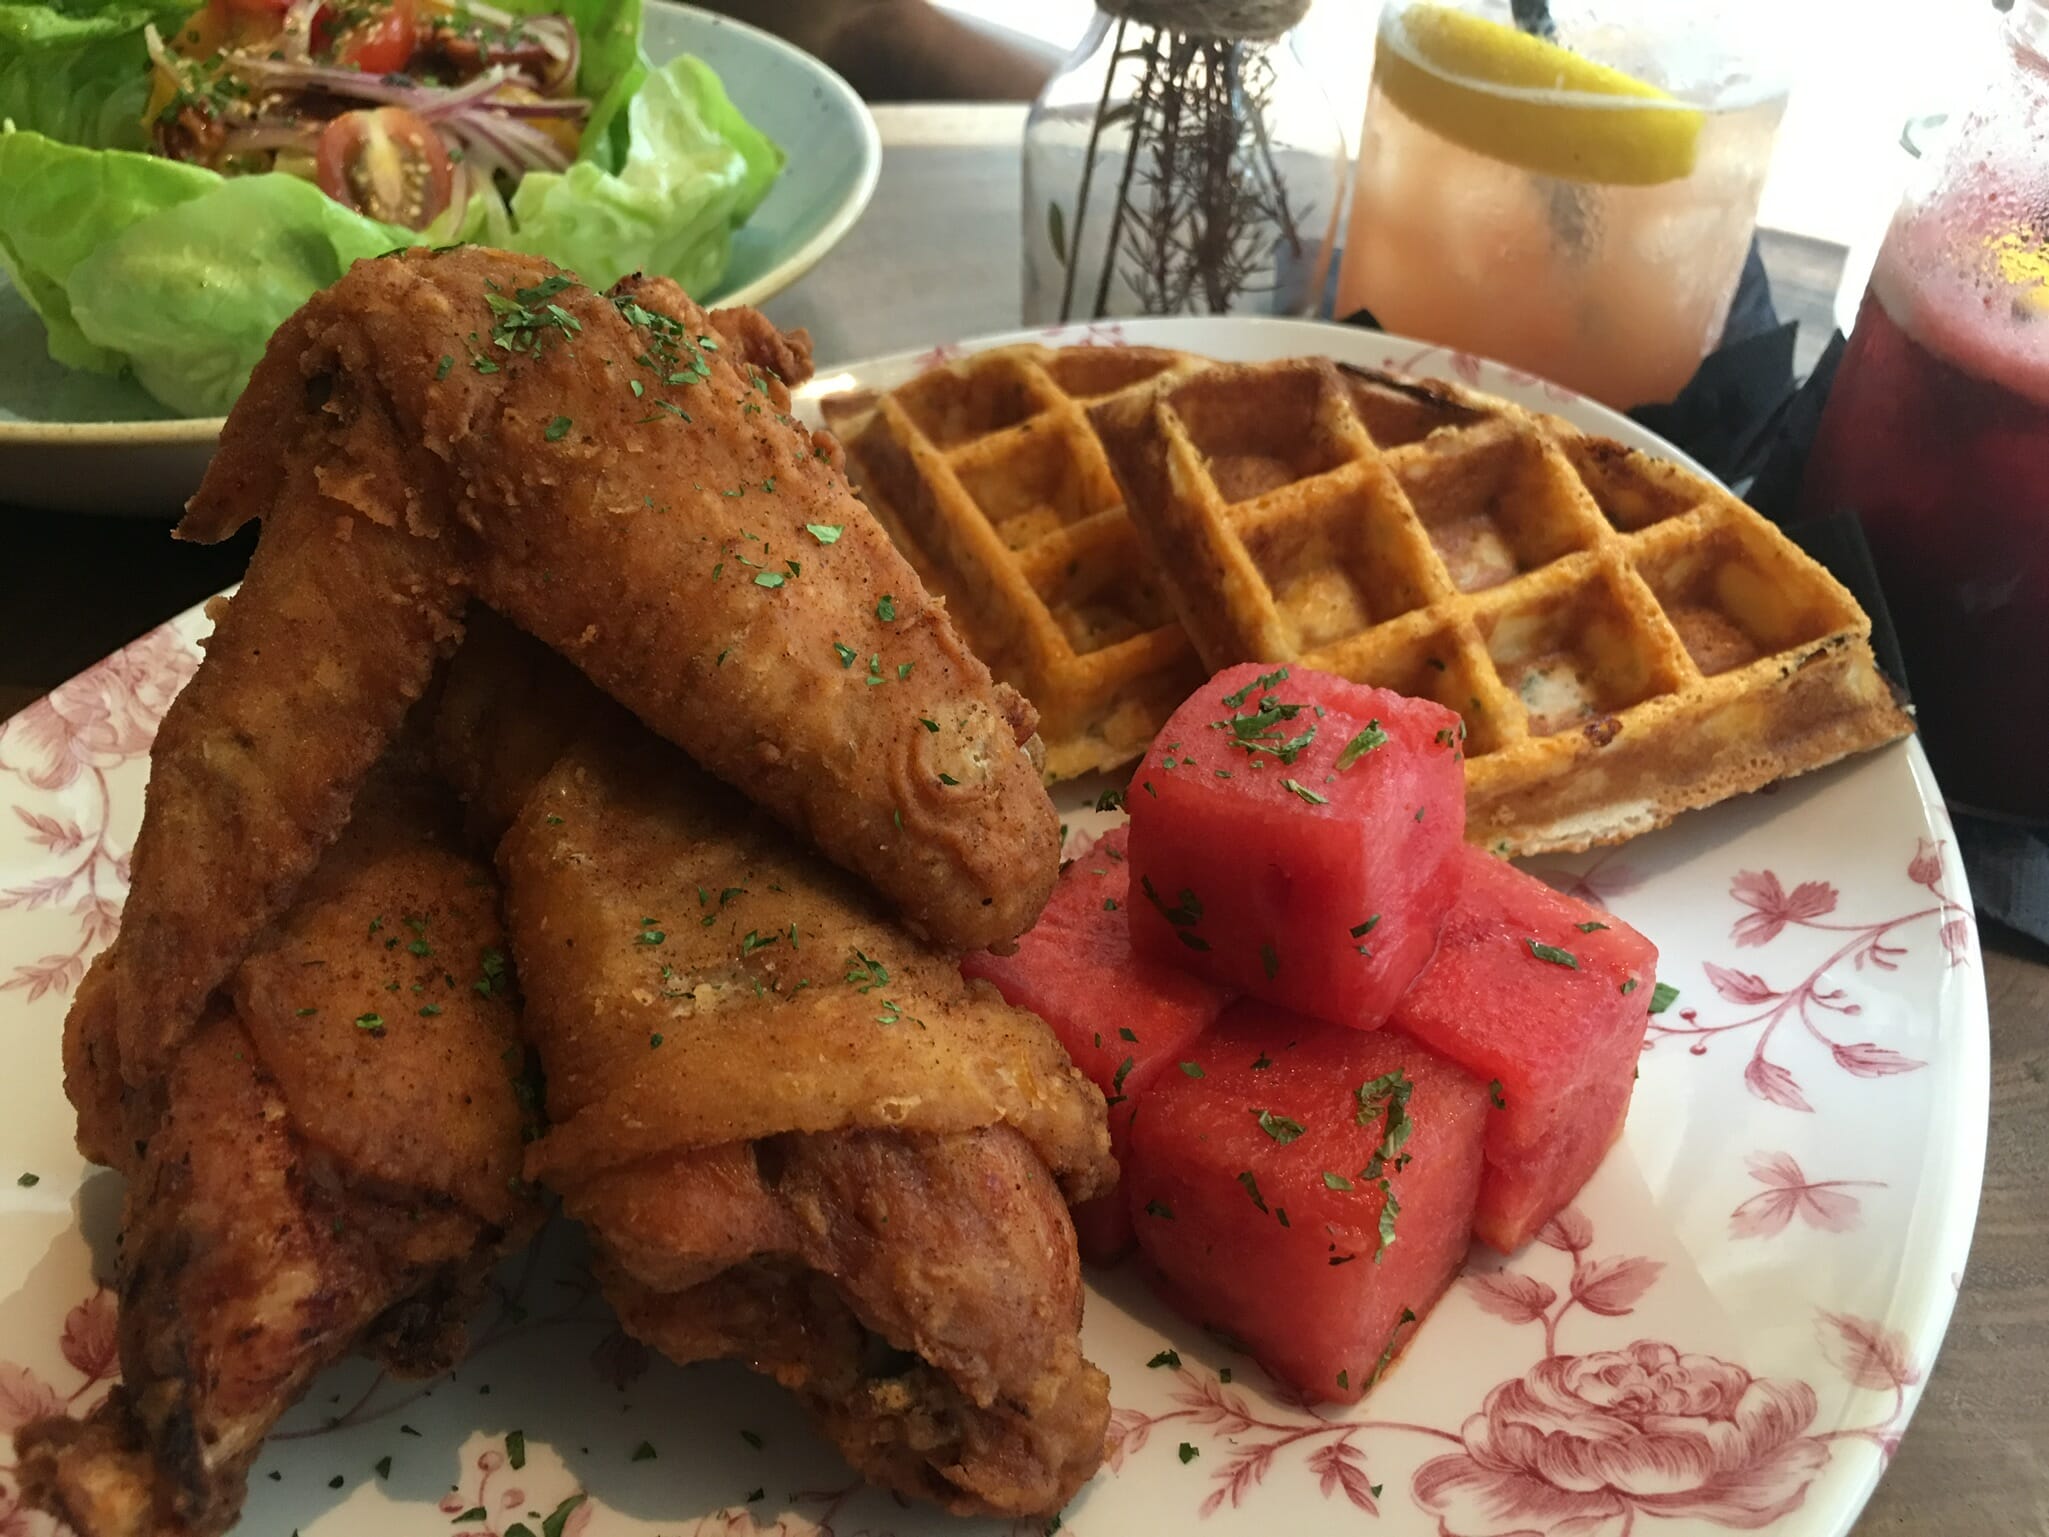 My Wok Life Cooking Blog - Fried Chicken & Waffles at The Bird Southern Table & Bar @ Marina Bay Sand -